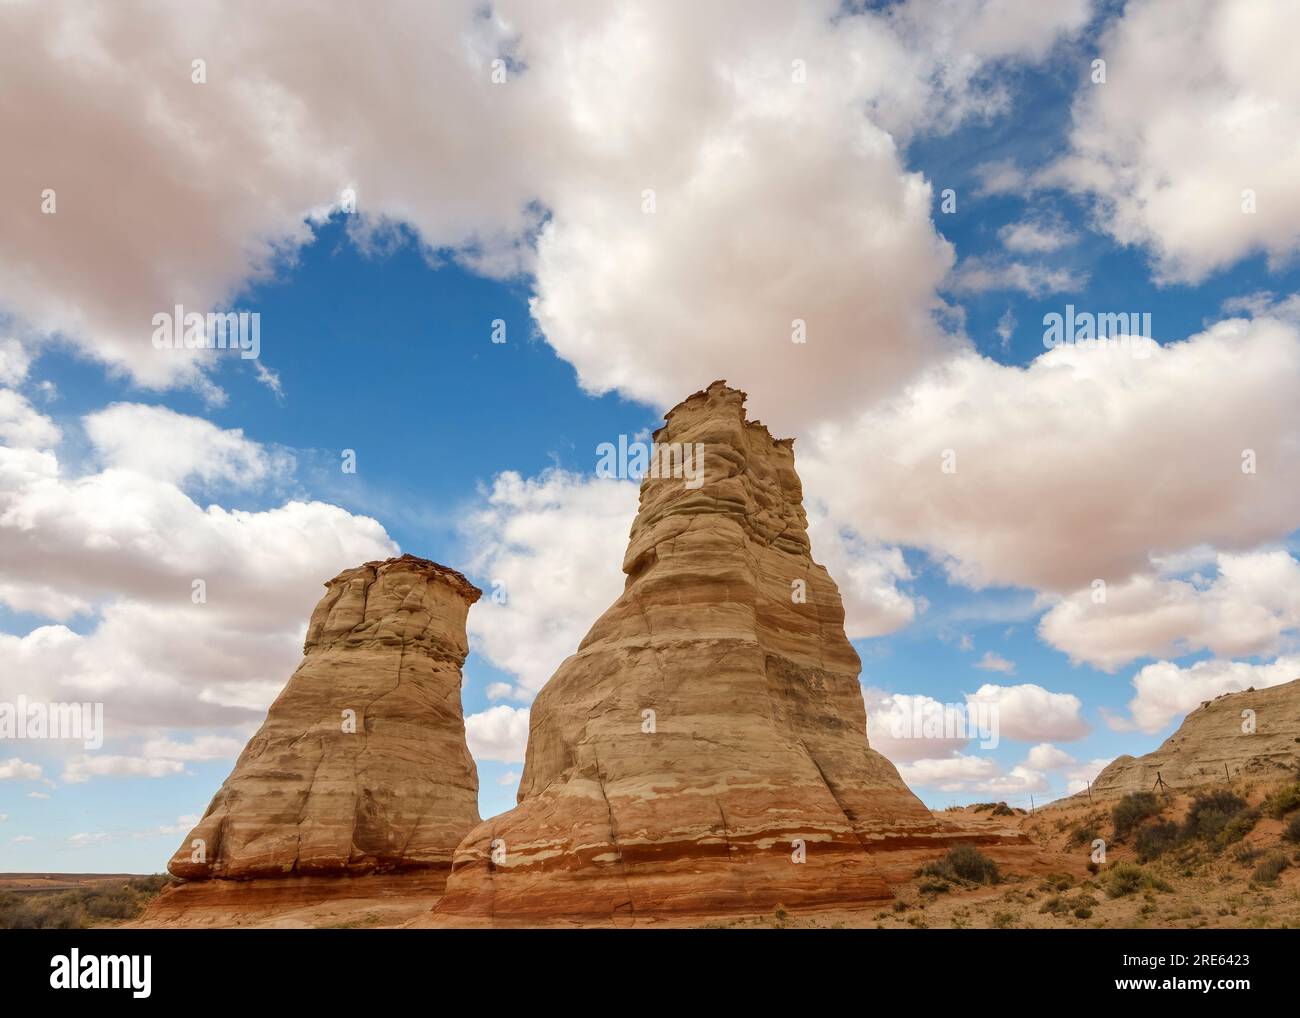 The 'Elephant Feet' rock formation outside Tonalea, Arizona. Stock Photo